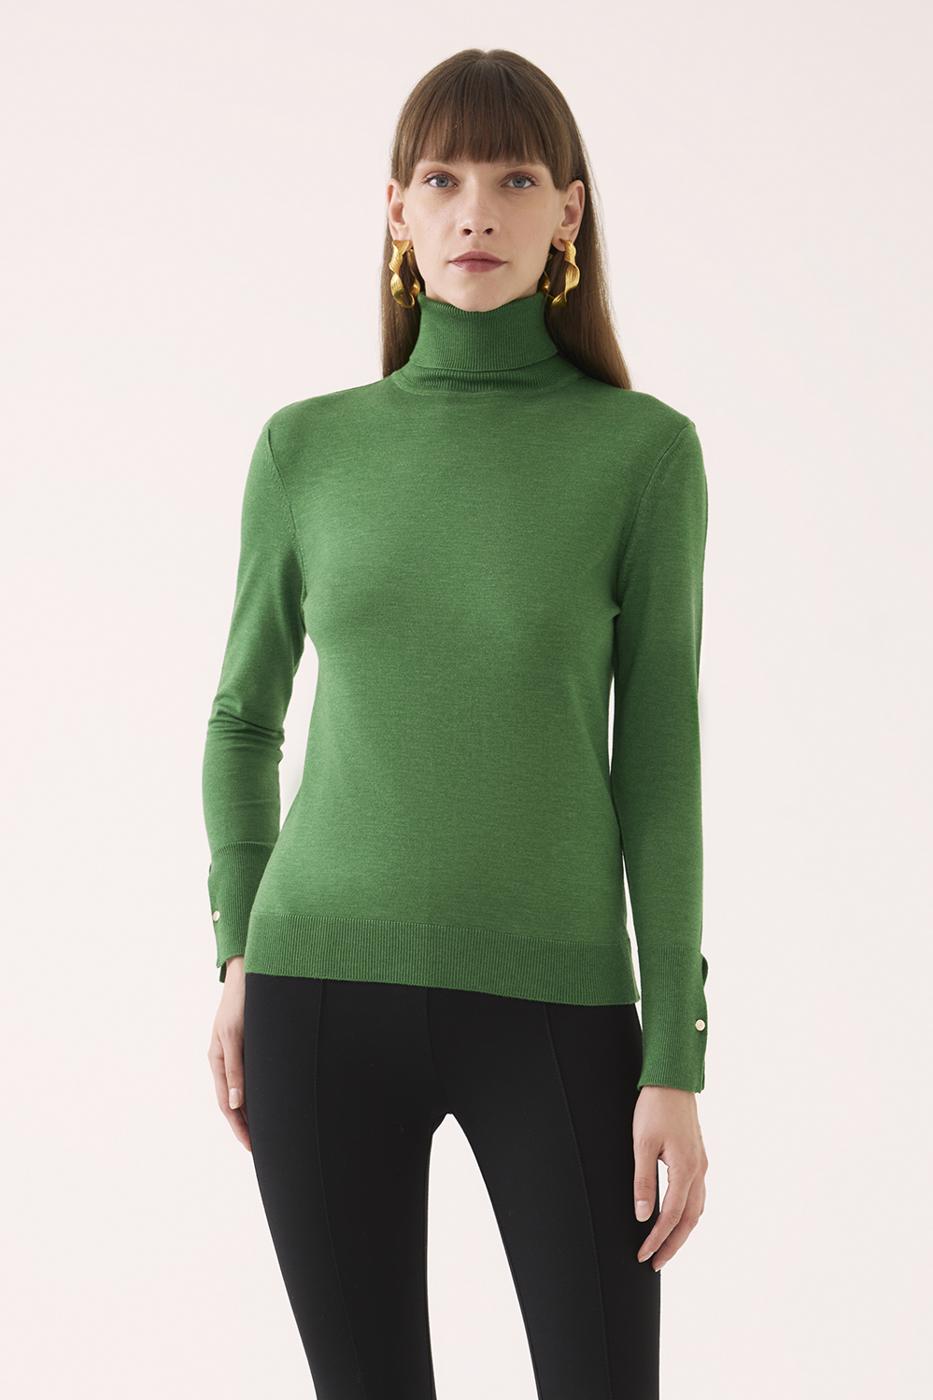 İllas Regular Fit Standart Boy Zümrüt Yeşili Renk Kadın Triko Bluz